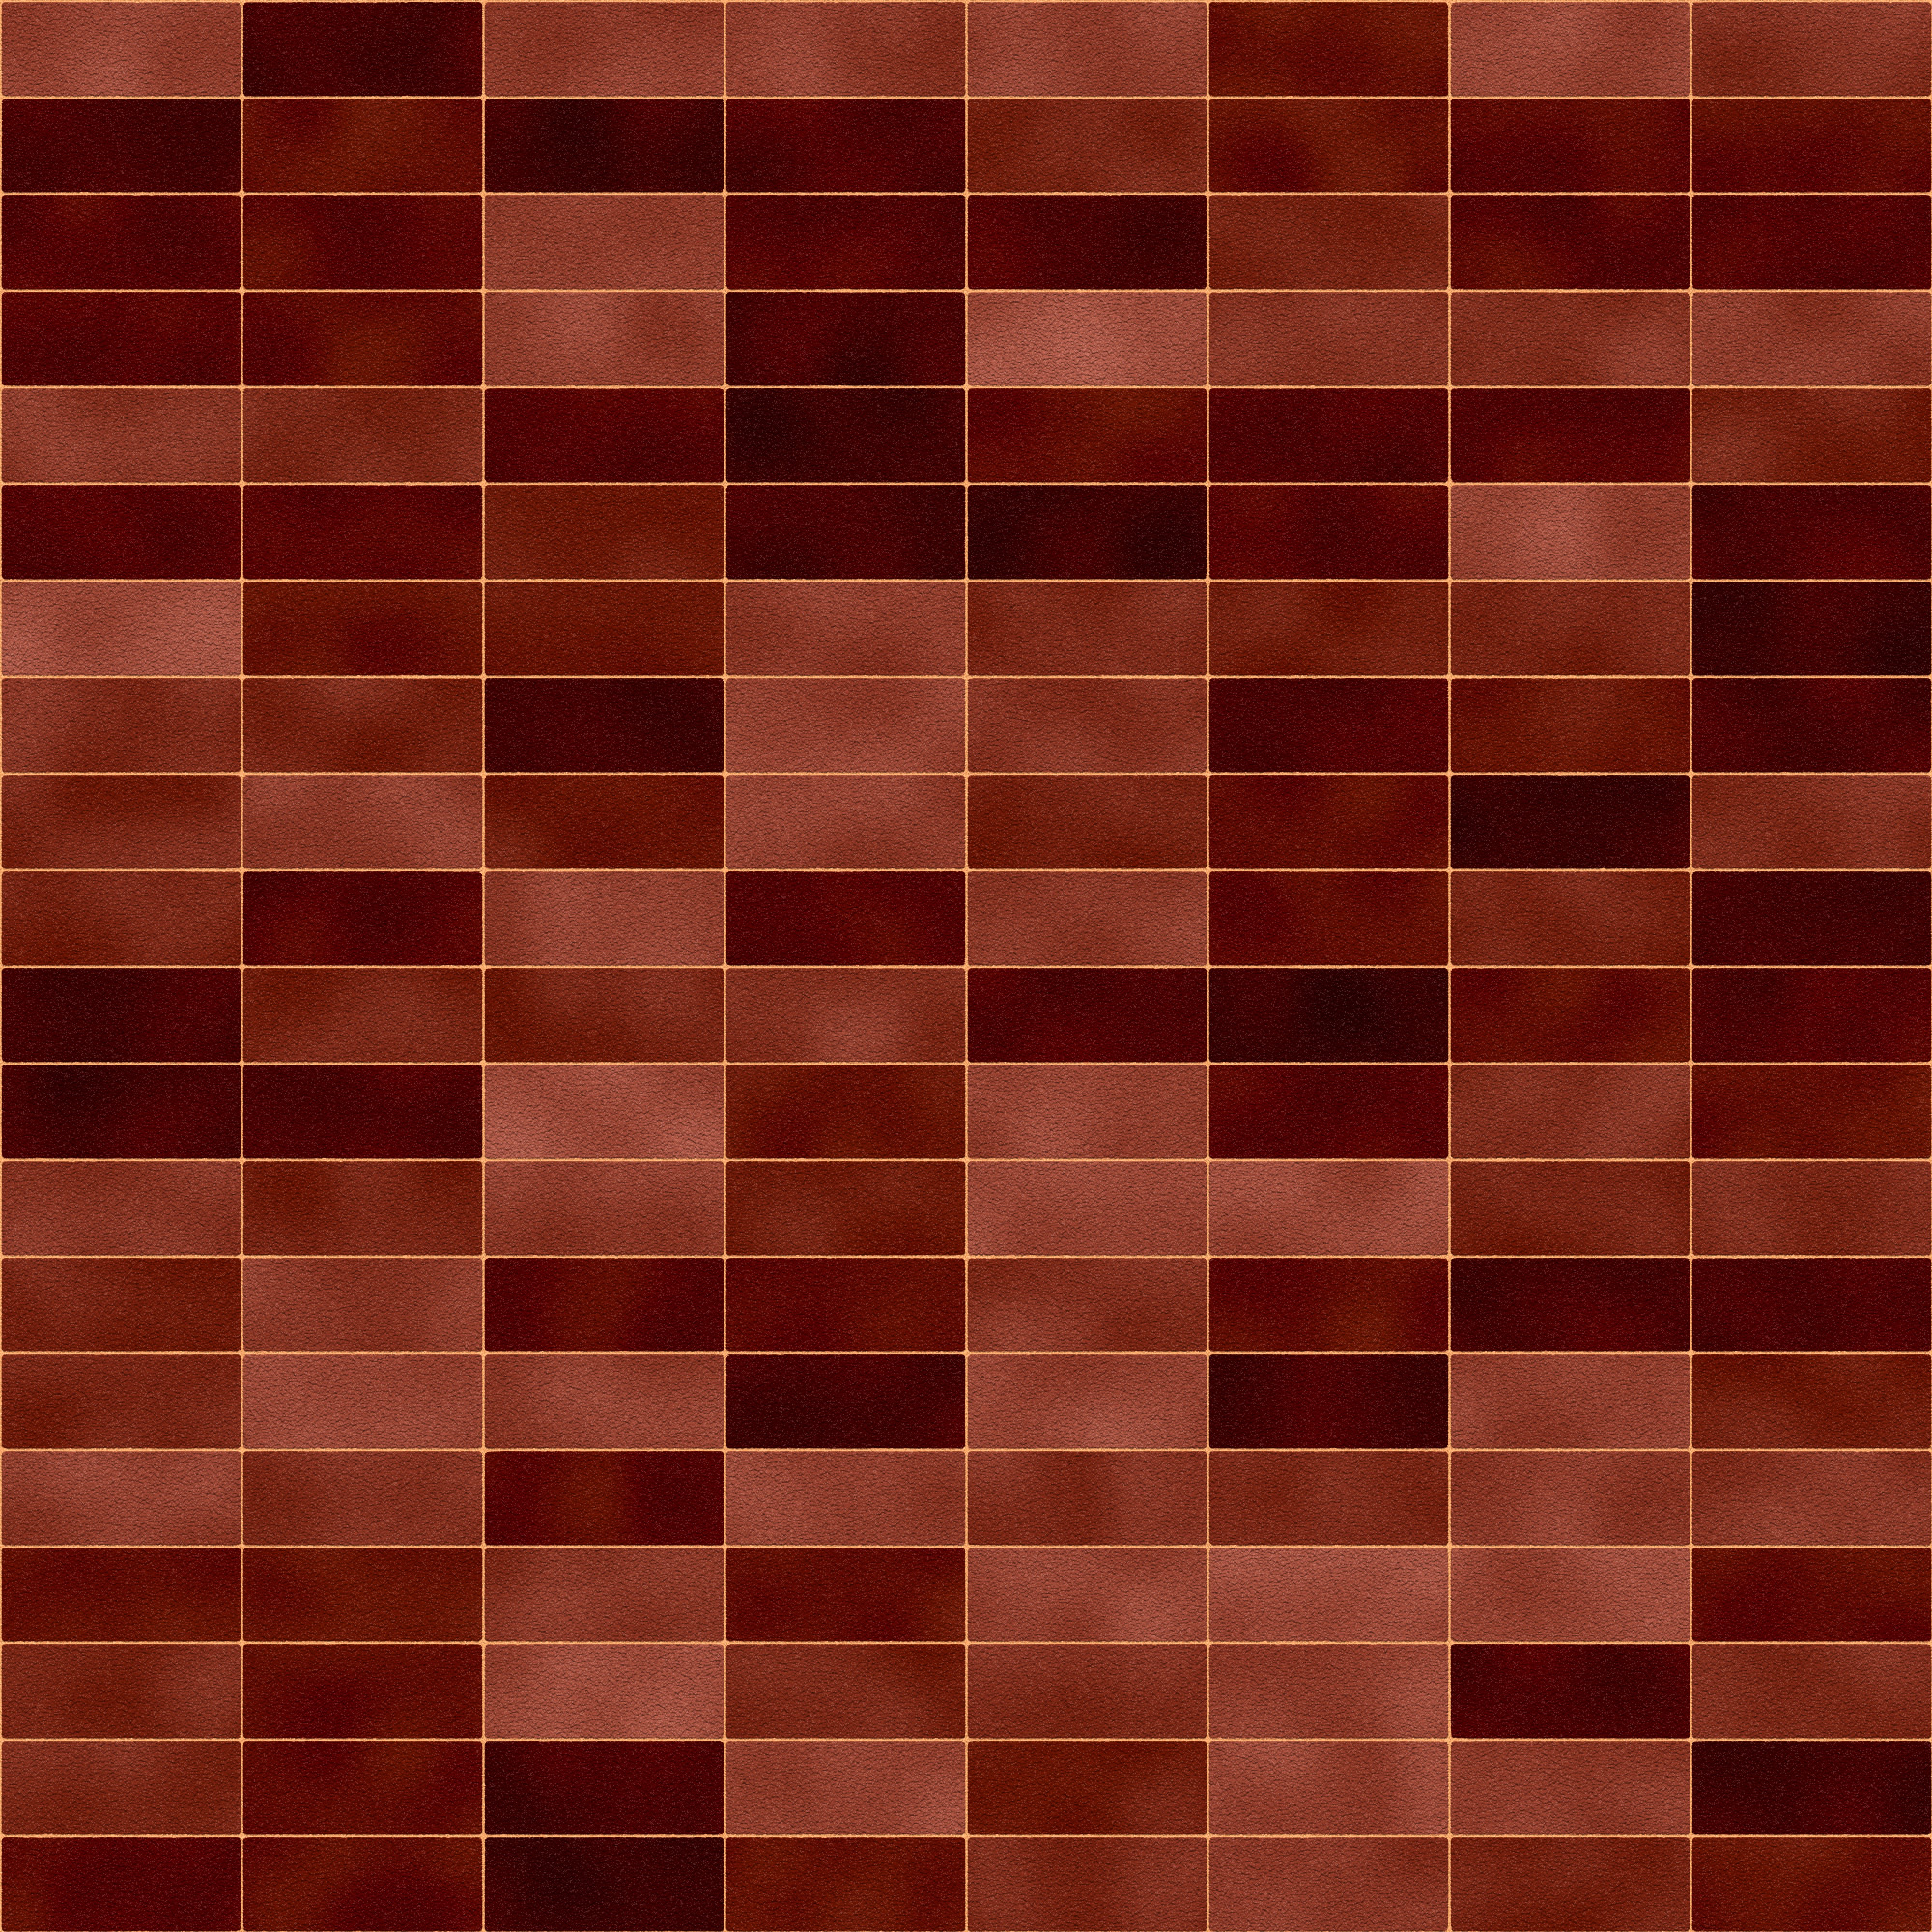 red brick wall texture, красная кирпичная стена, скачать фото, фон, текстура